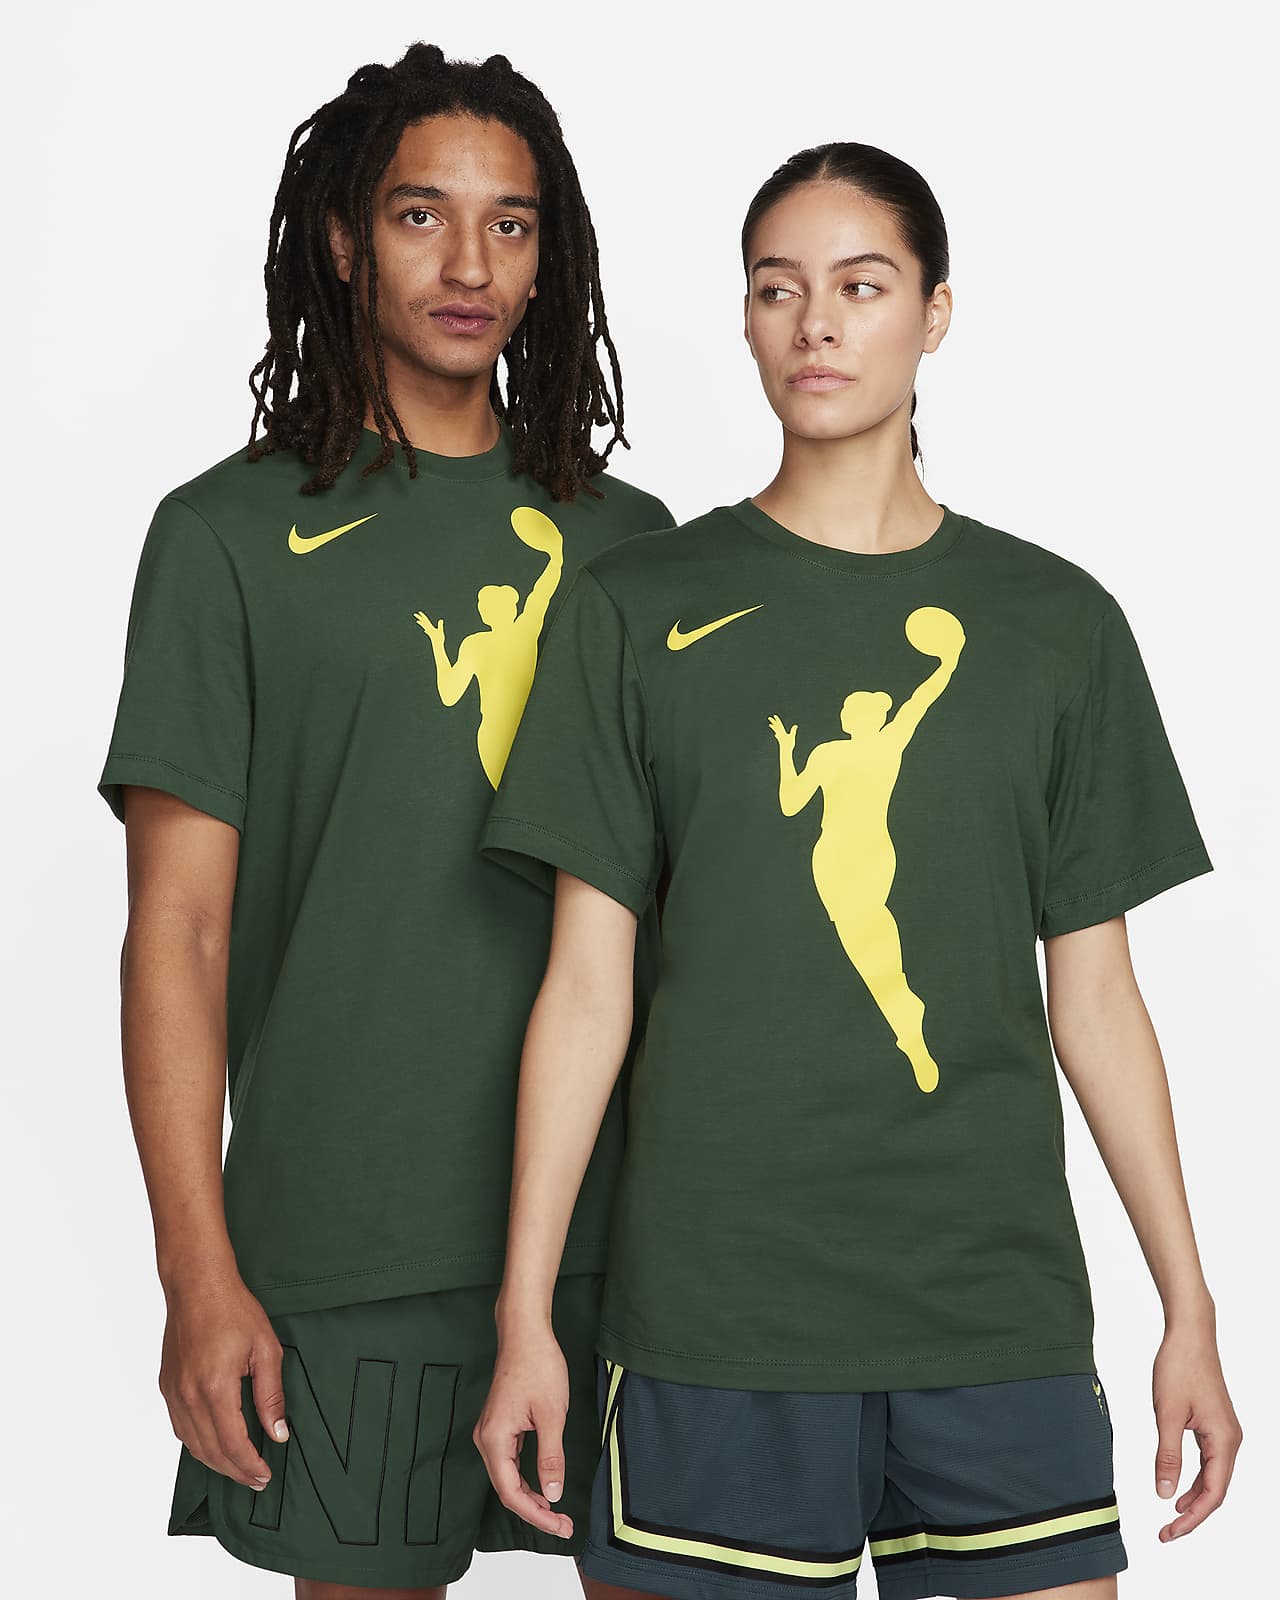 Playera Nike WNBA Team 13